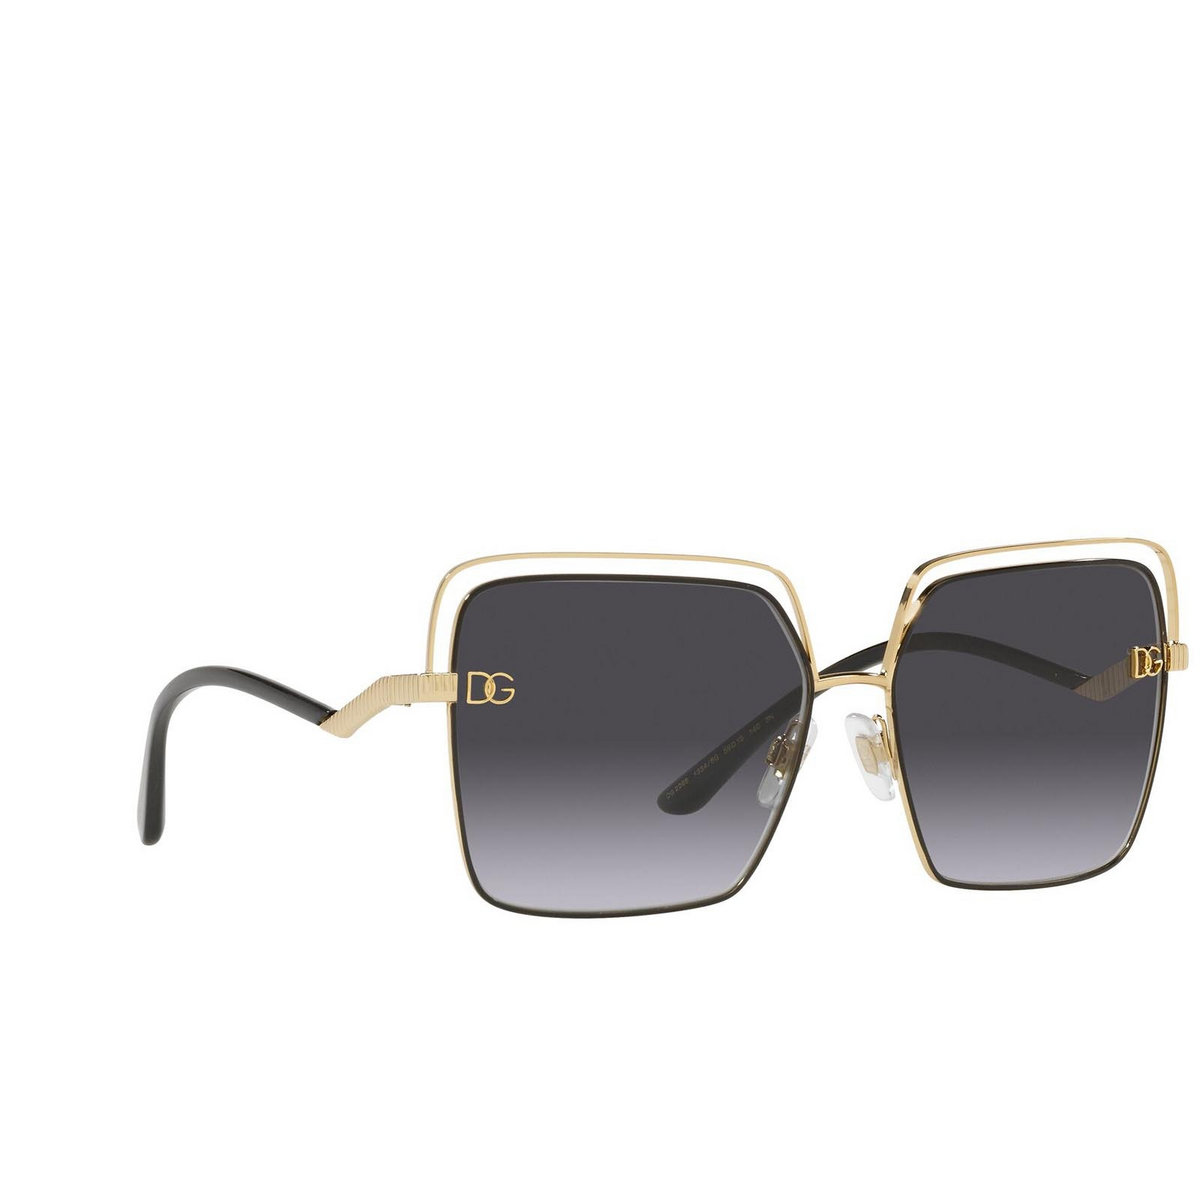 Dolce & Gabbana® Square Sunglasses: DG2268 color Gold/black 13348G - three-quarters view.